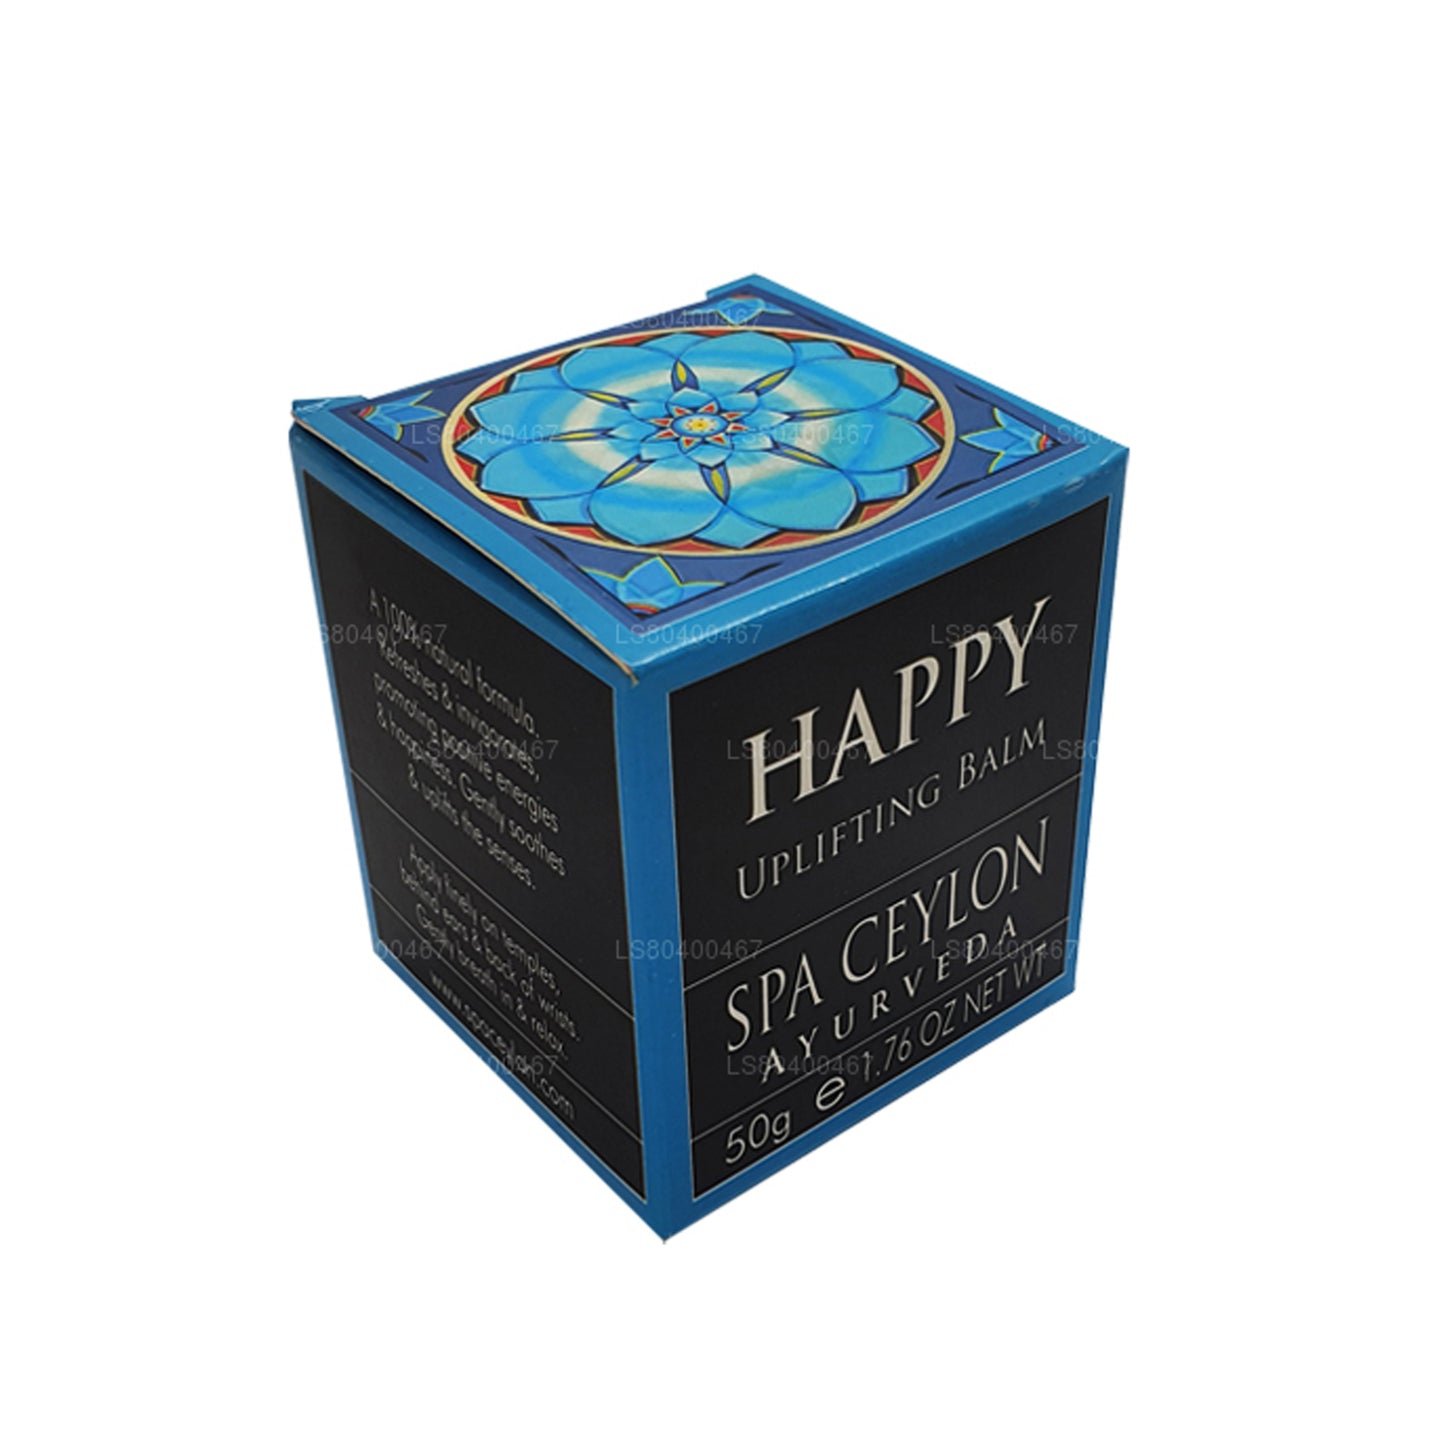 Spa Ceylon Happy Uplifting Balm (50g)